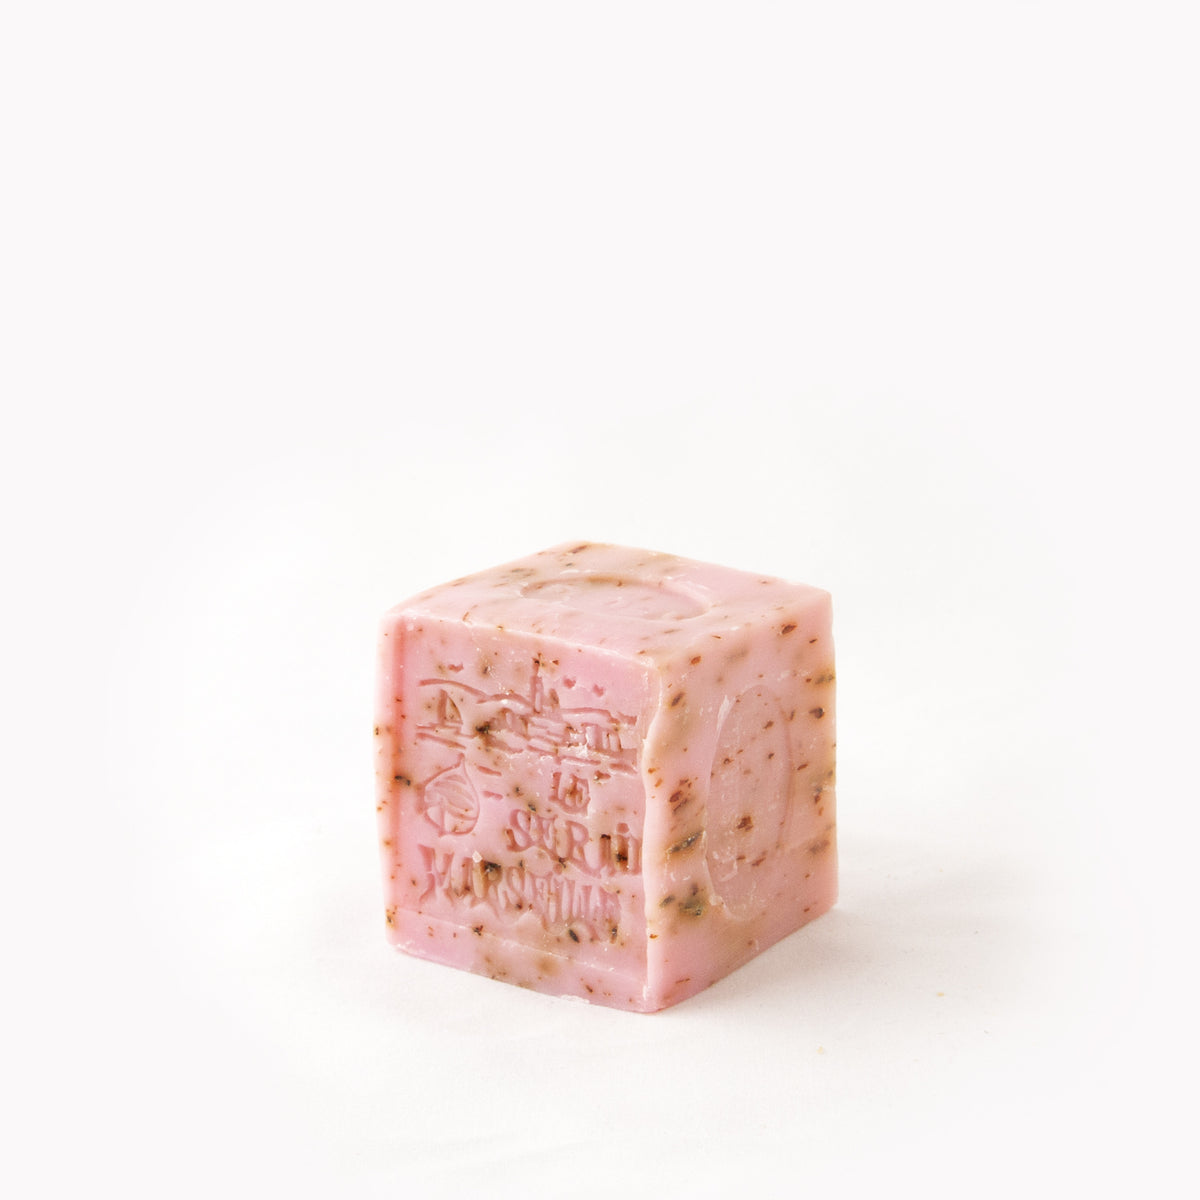 Marseille soap Cube 150g – Rose